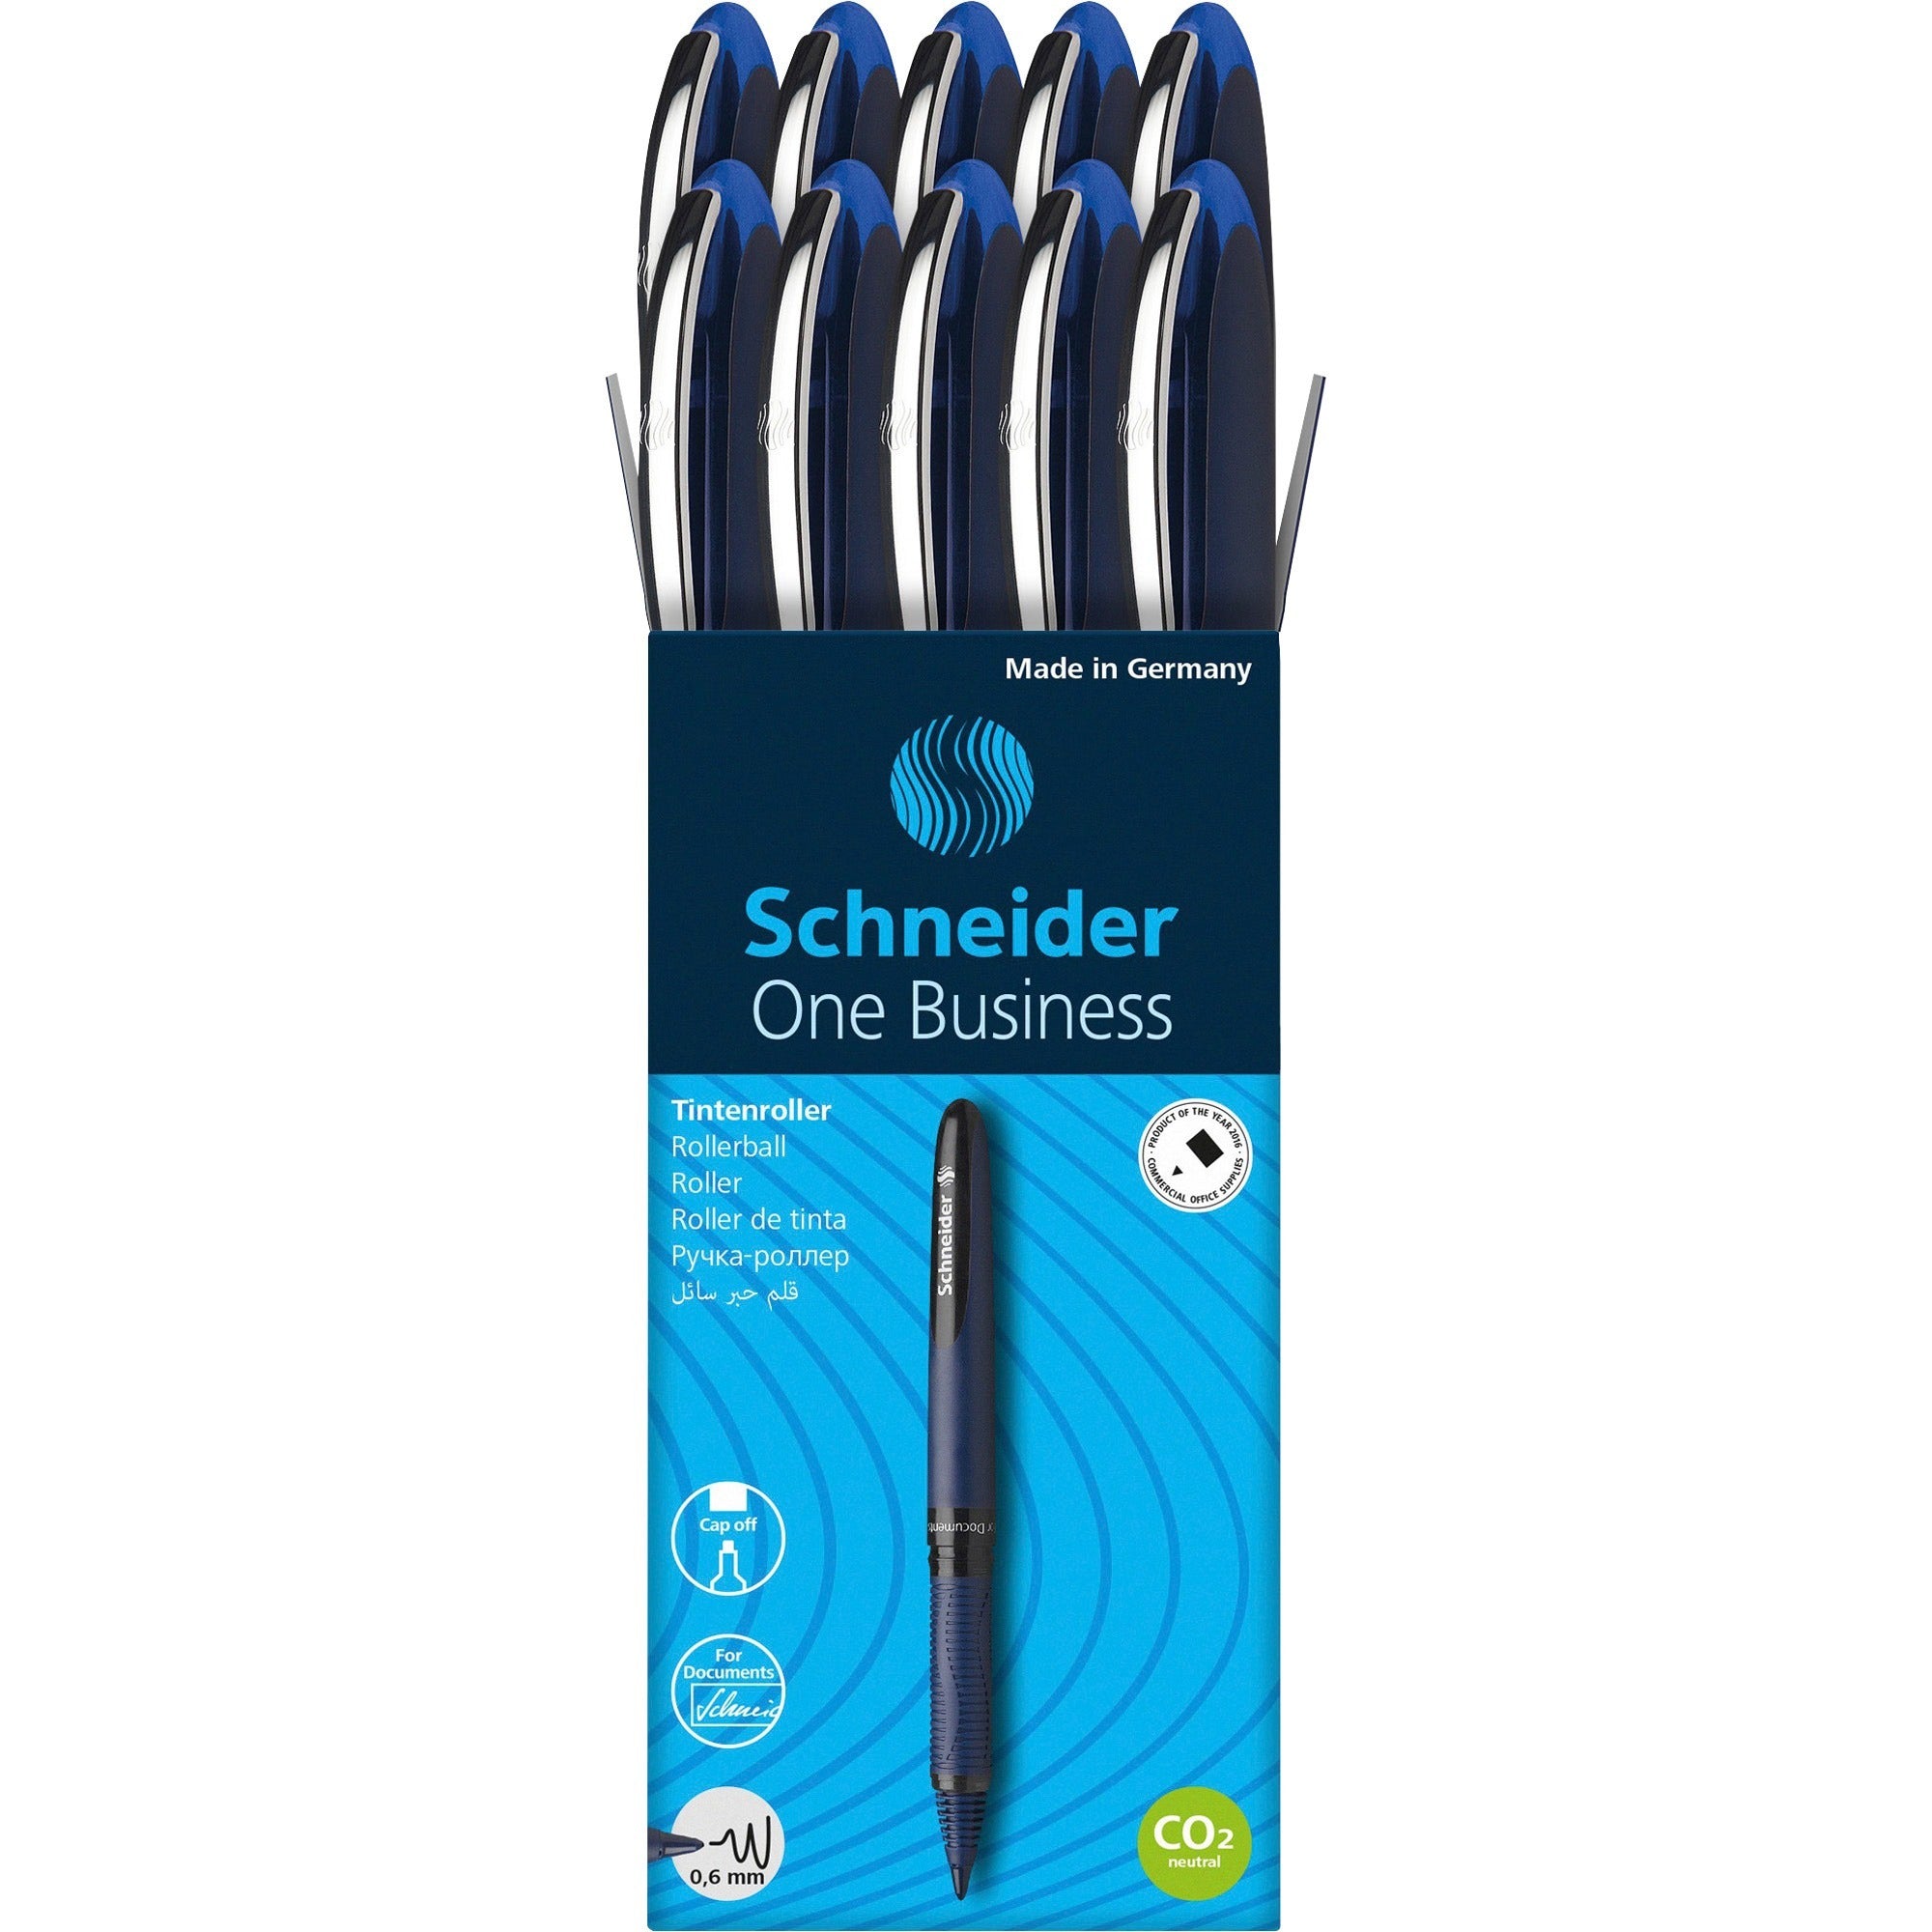 schneider-one-business-rollerball-medium-pen-point-06-mm-pen-point-size-blue-blue-dark-blue-barrel-10-pack_red183003 - 1